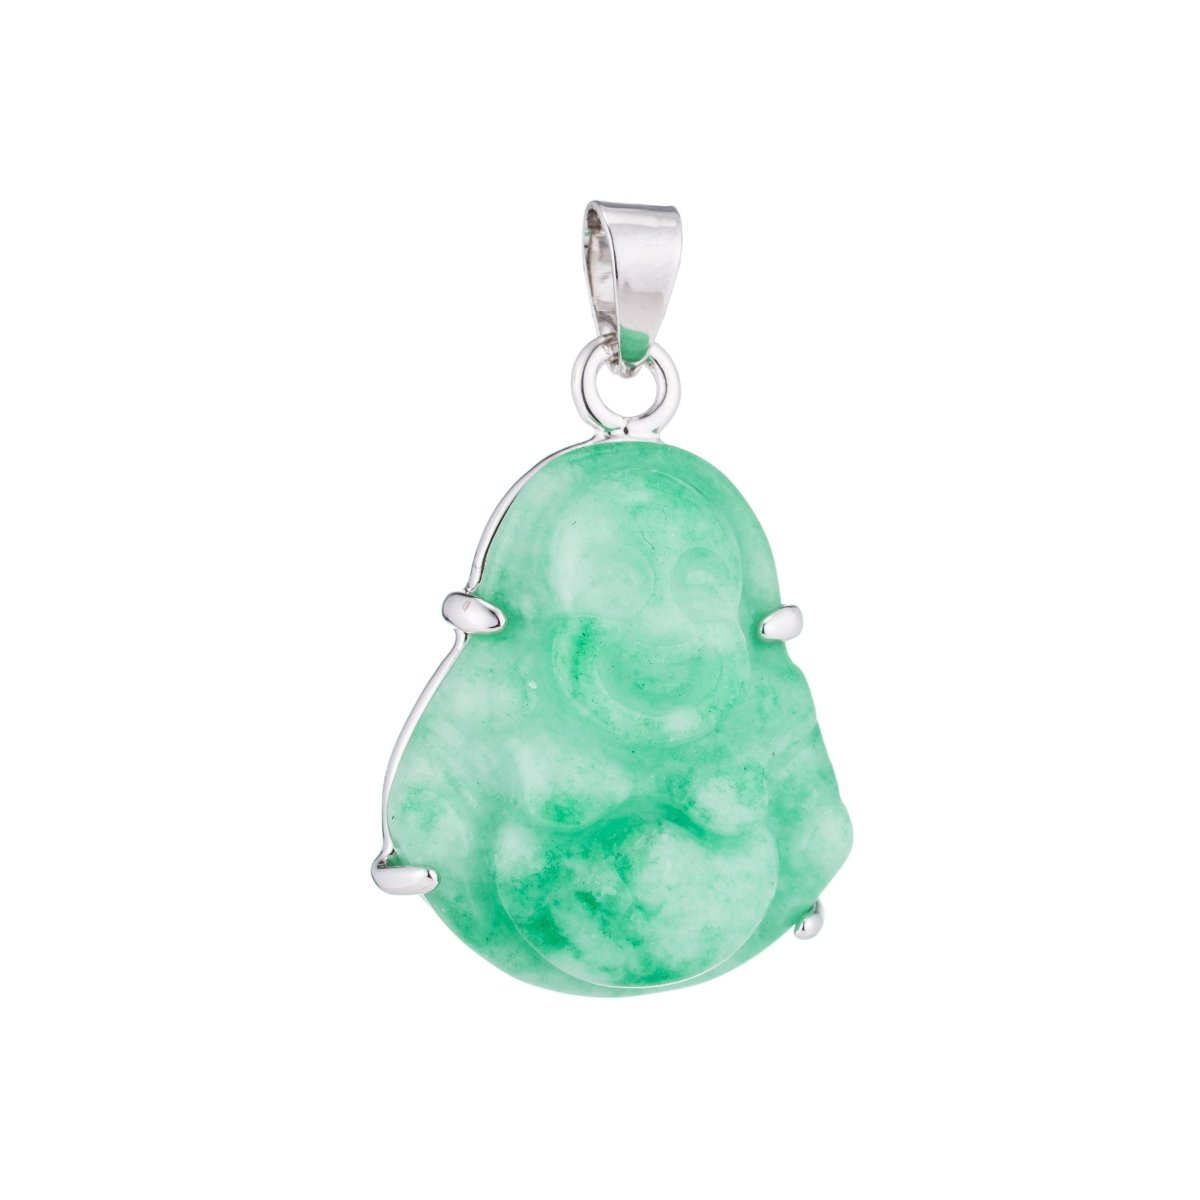 1pc Genuine Green Jade, Authentic, Laughing Buddha, Gemstone Buddhism Deity Religious Bracelet Charm Bead Finding Pendant For Jewelry Making O-091 - DLUXCA